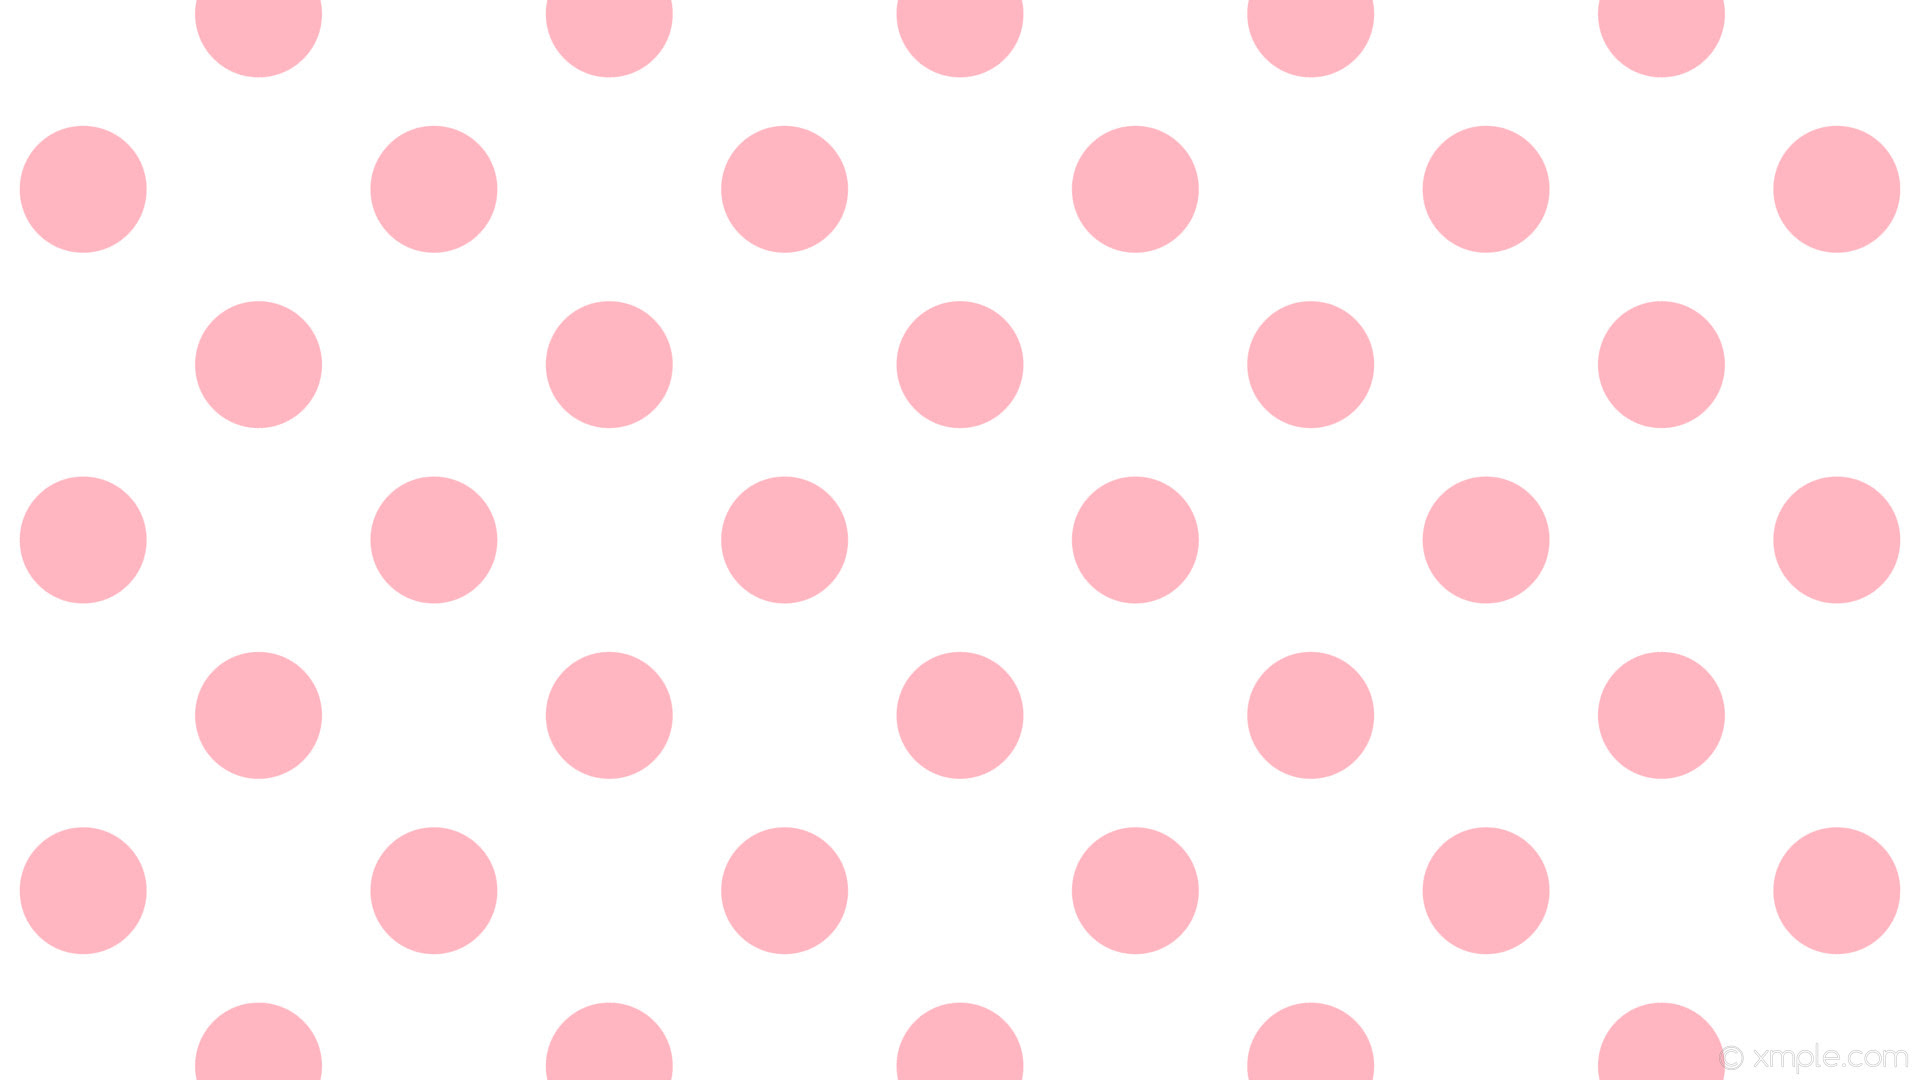 8. Light Pink and Polka Dot Nail Design on Tumblr - wide 3